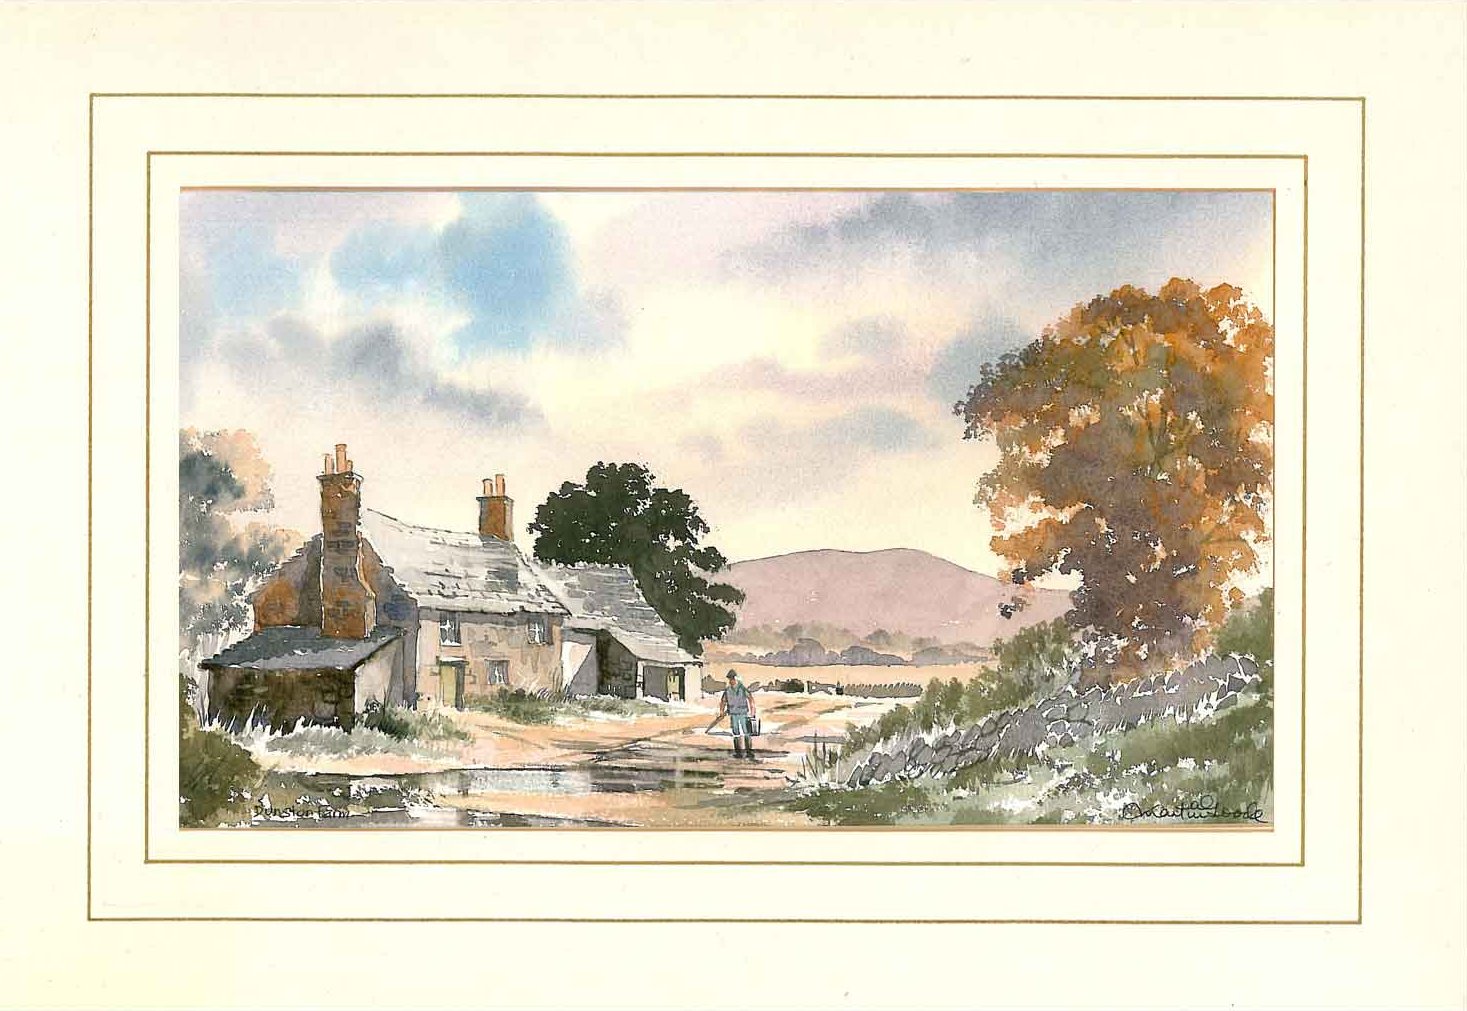 Dunston Farm, Original Watercolour Painting by Martin Goode